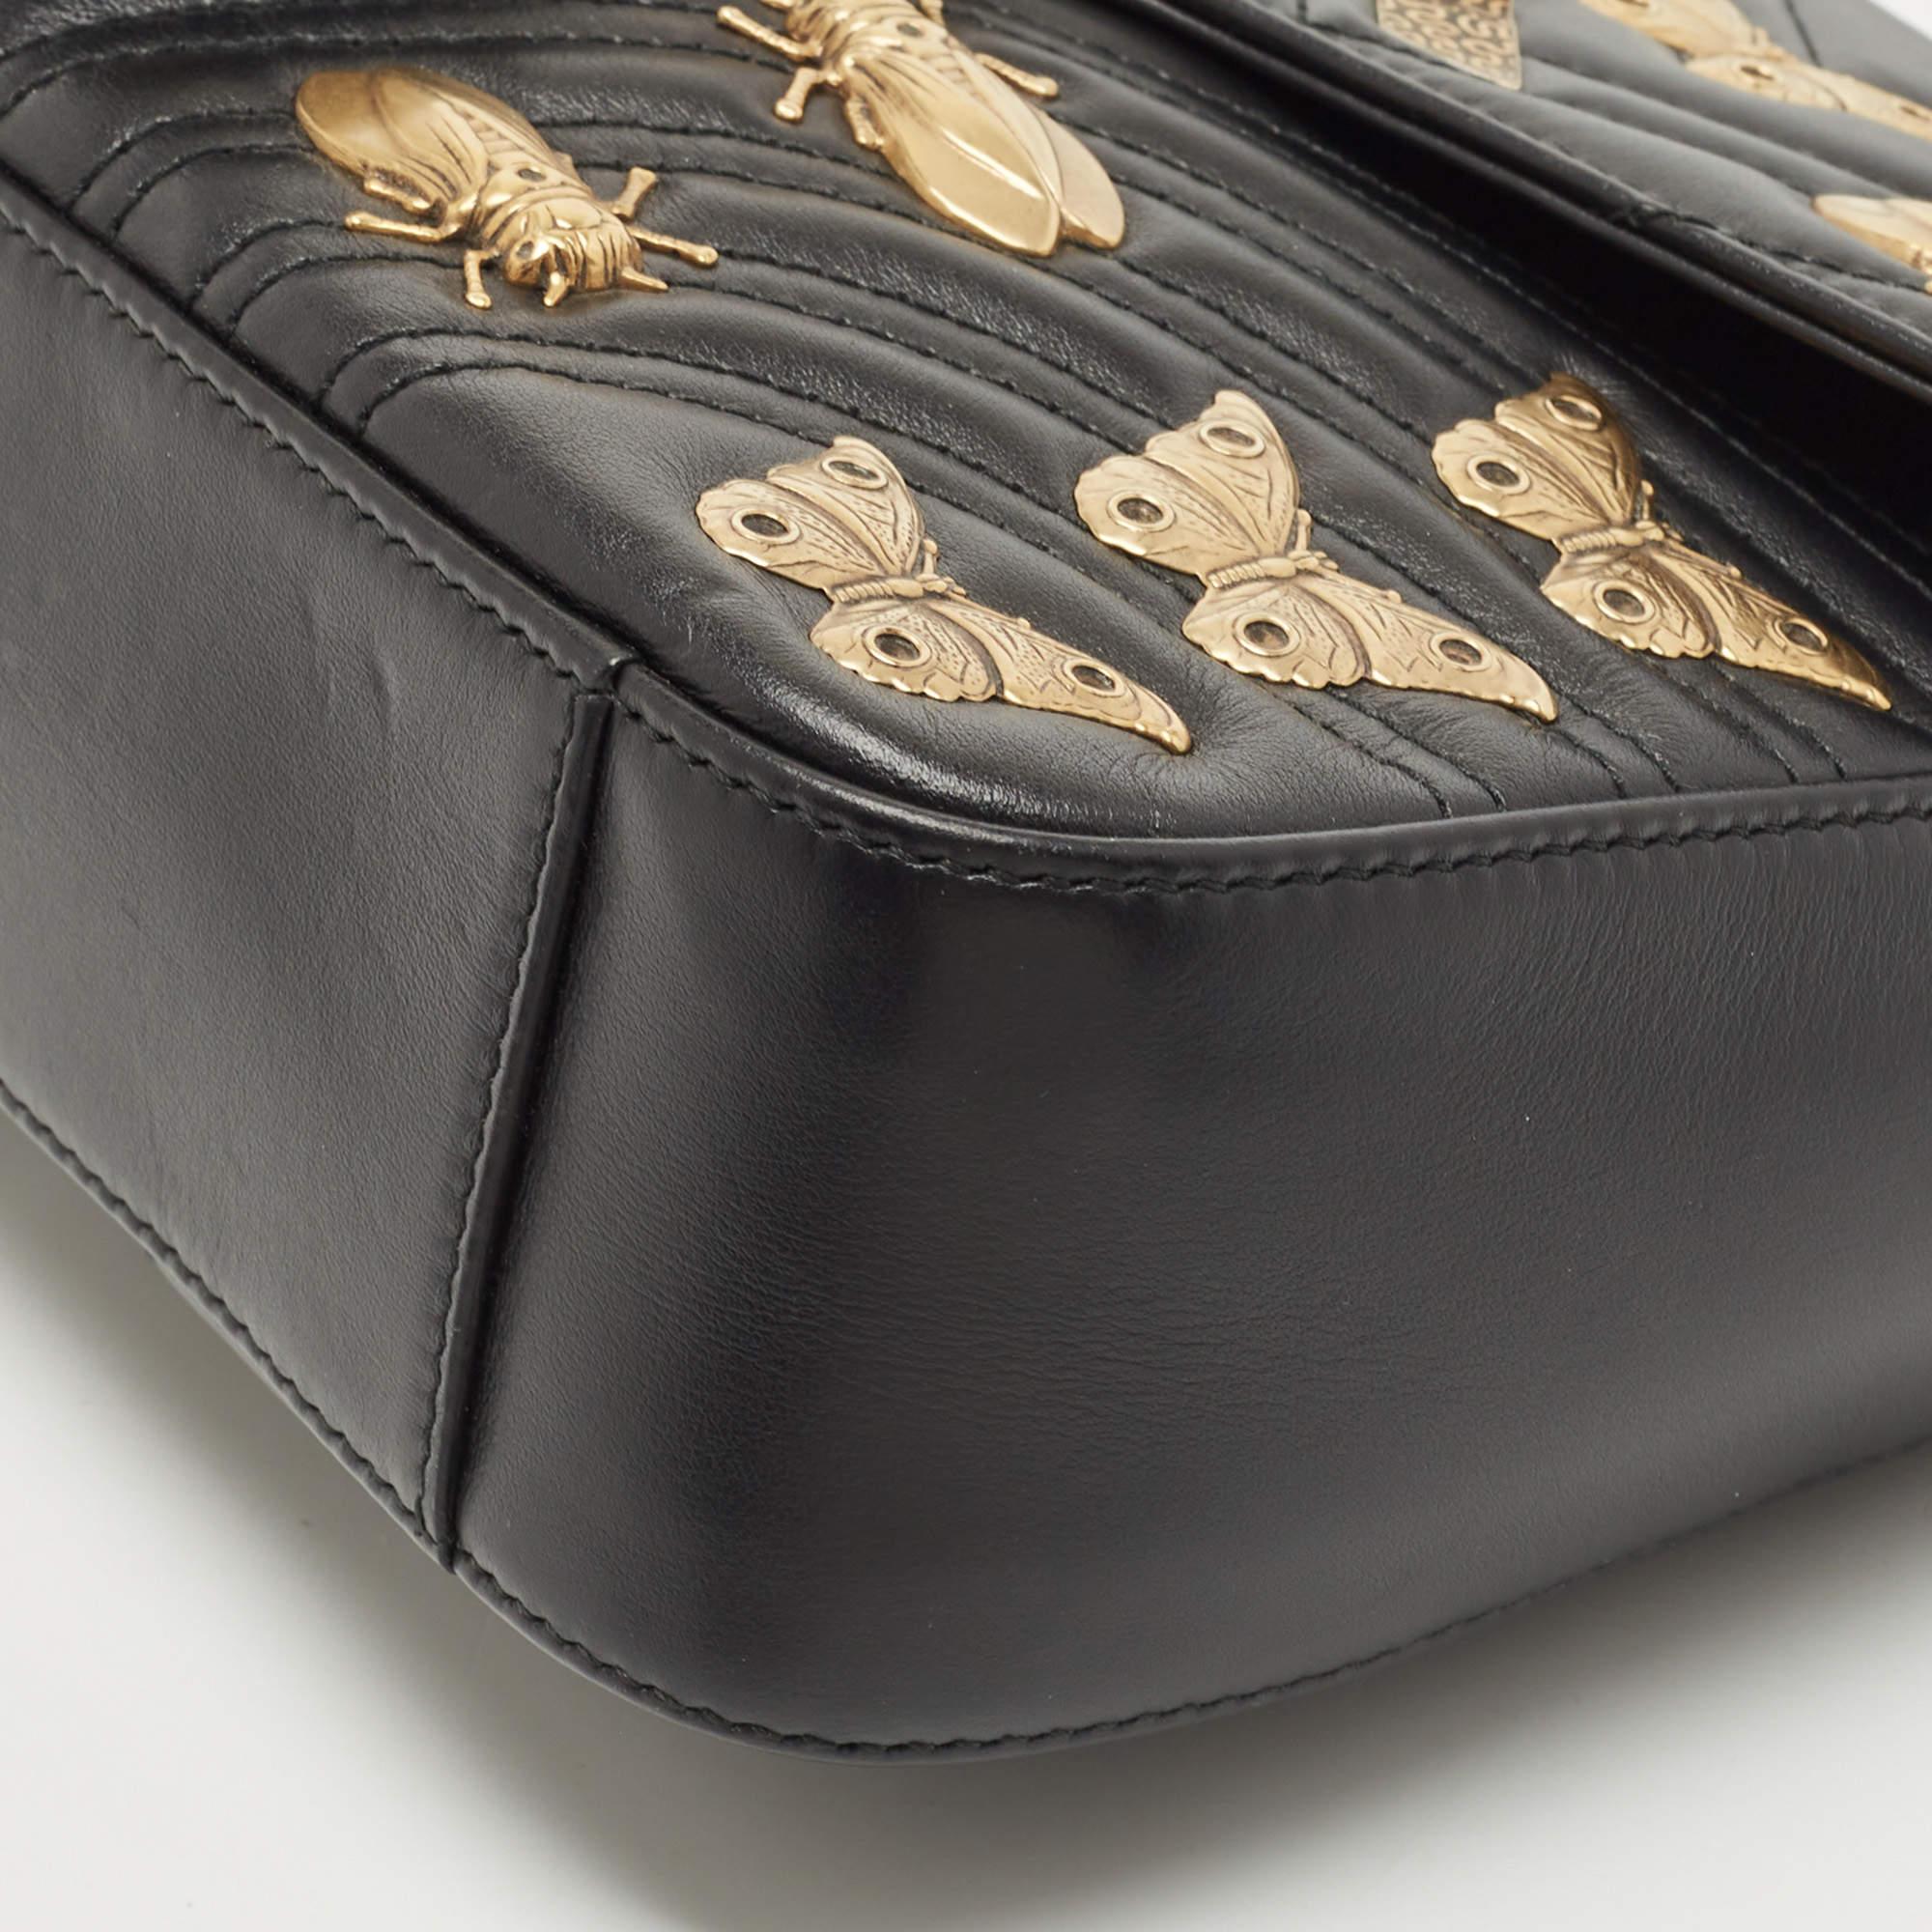 Gucci Black Matelasse Leather Medium GG Marmont Animal Studs Shoulder Bag 1